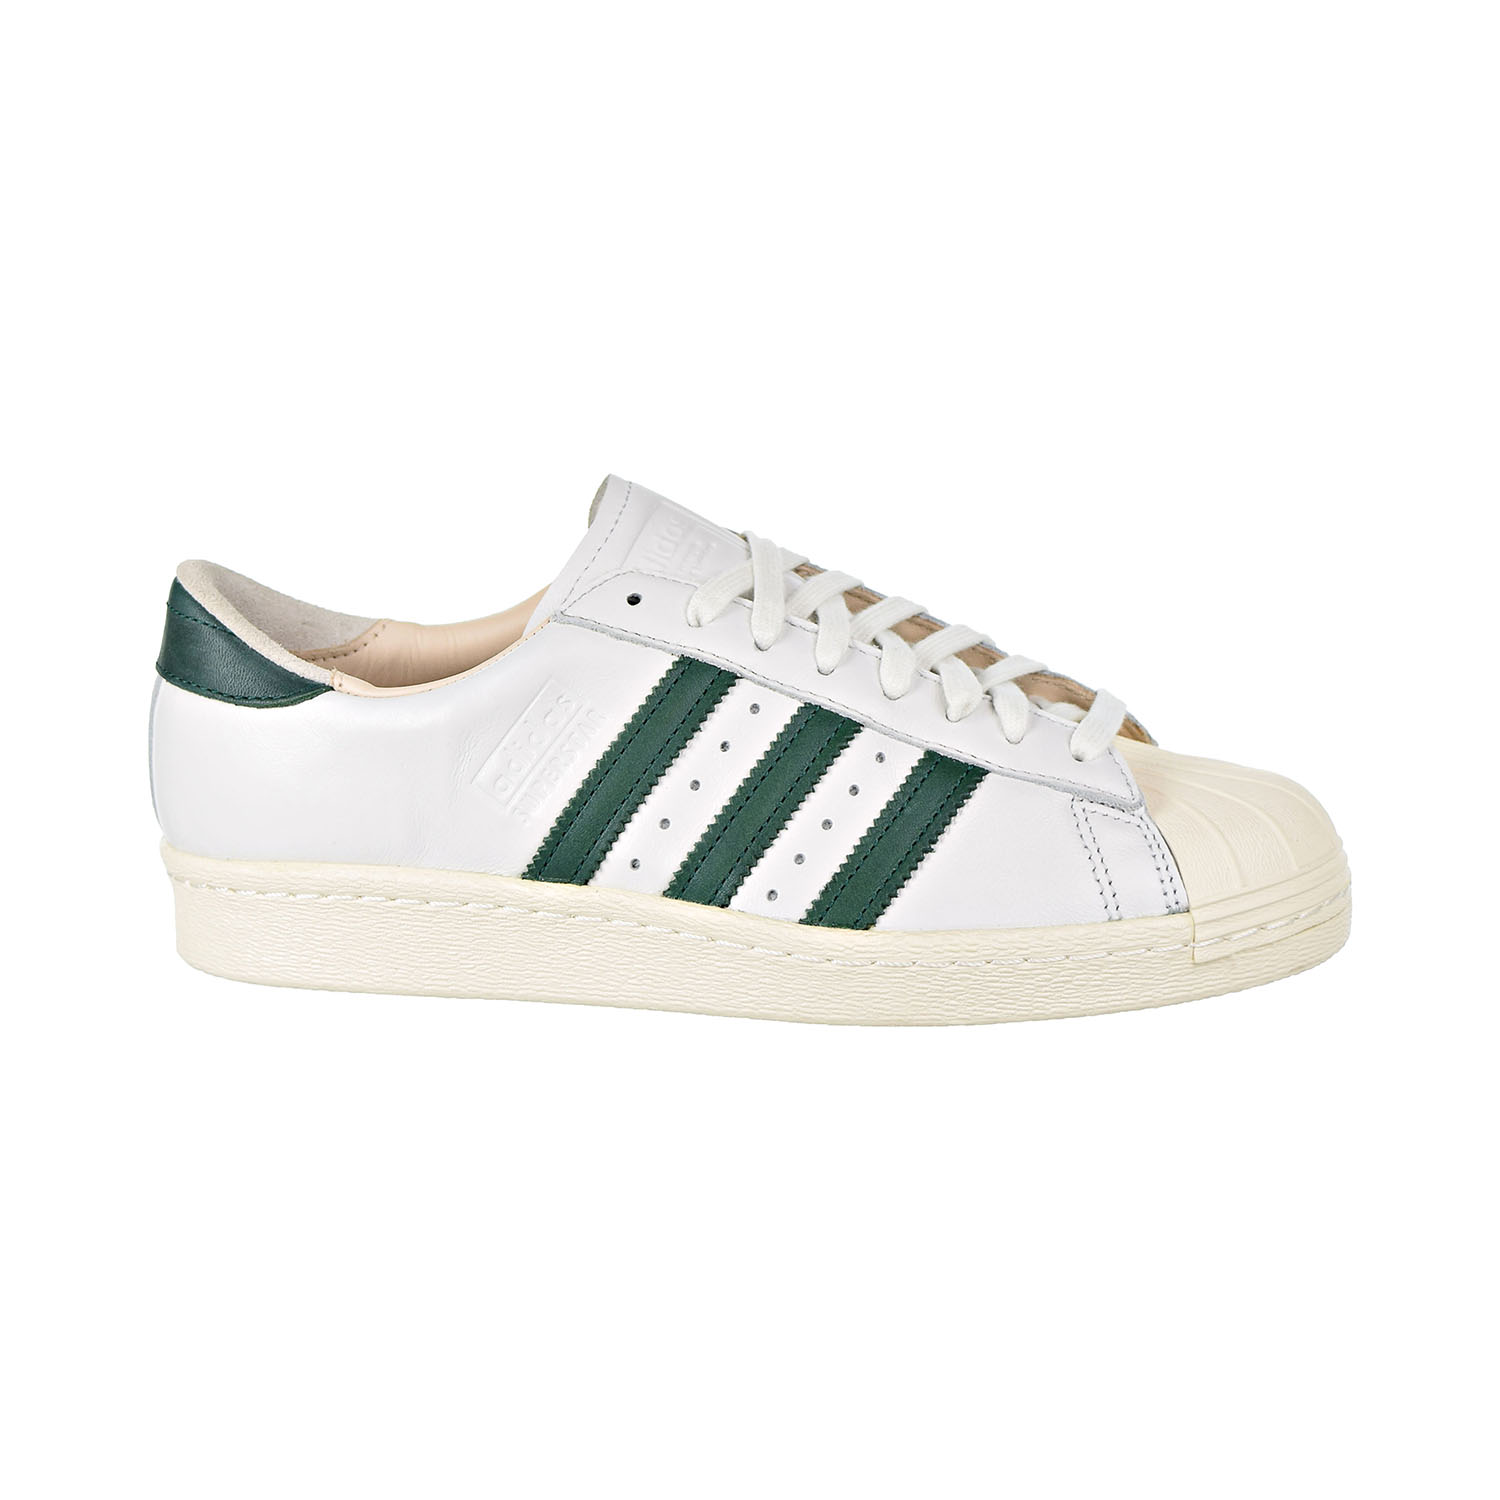 Adidas Superstar 80s Recon Men's Shoes Crystal White-Collegiate Green  B41719 | eBay